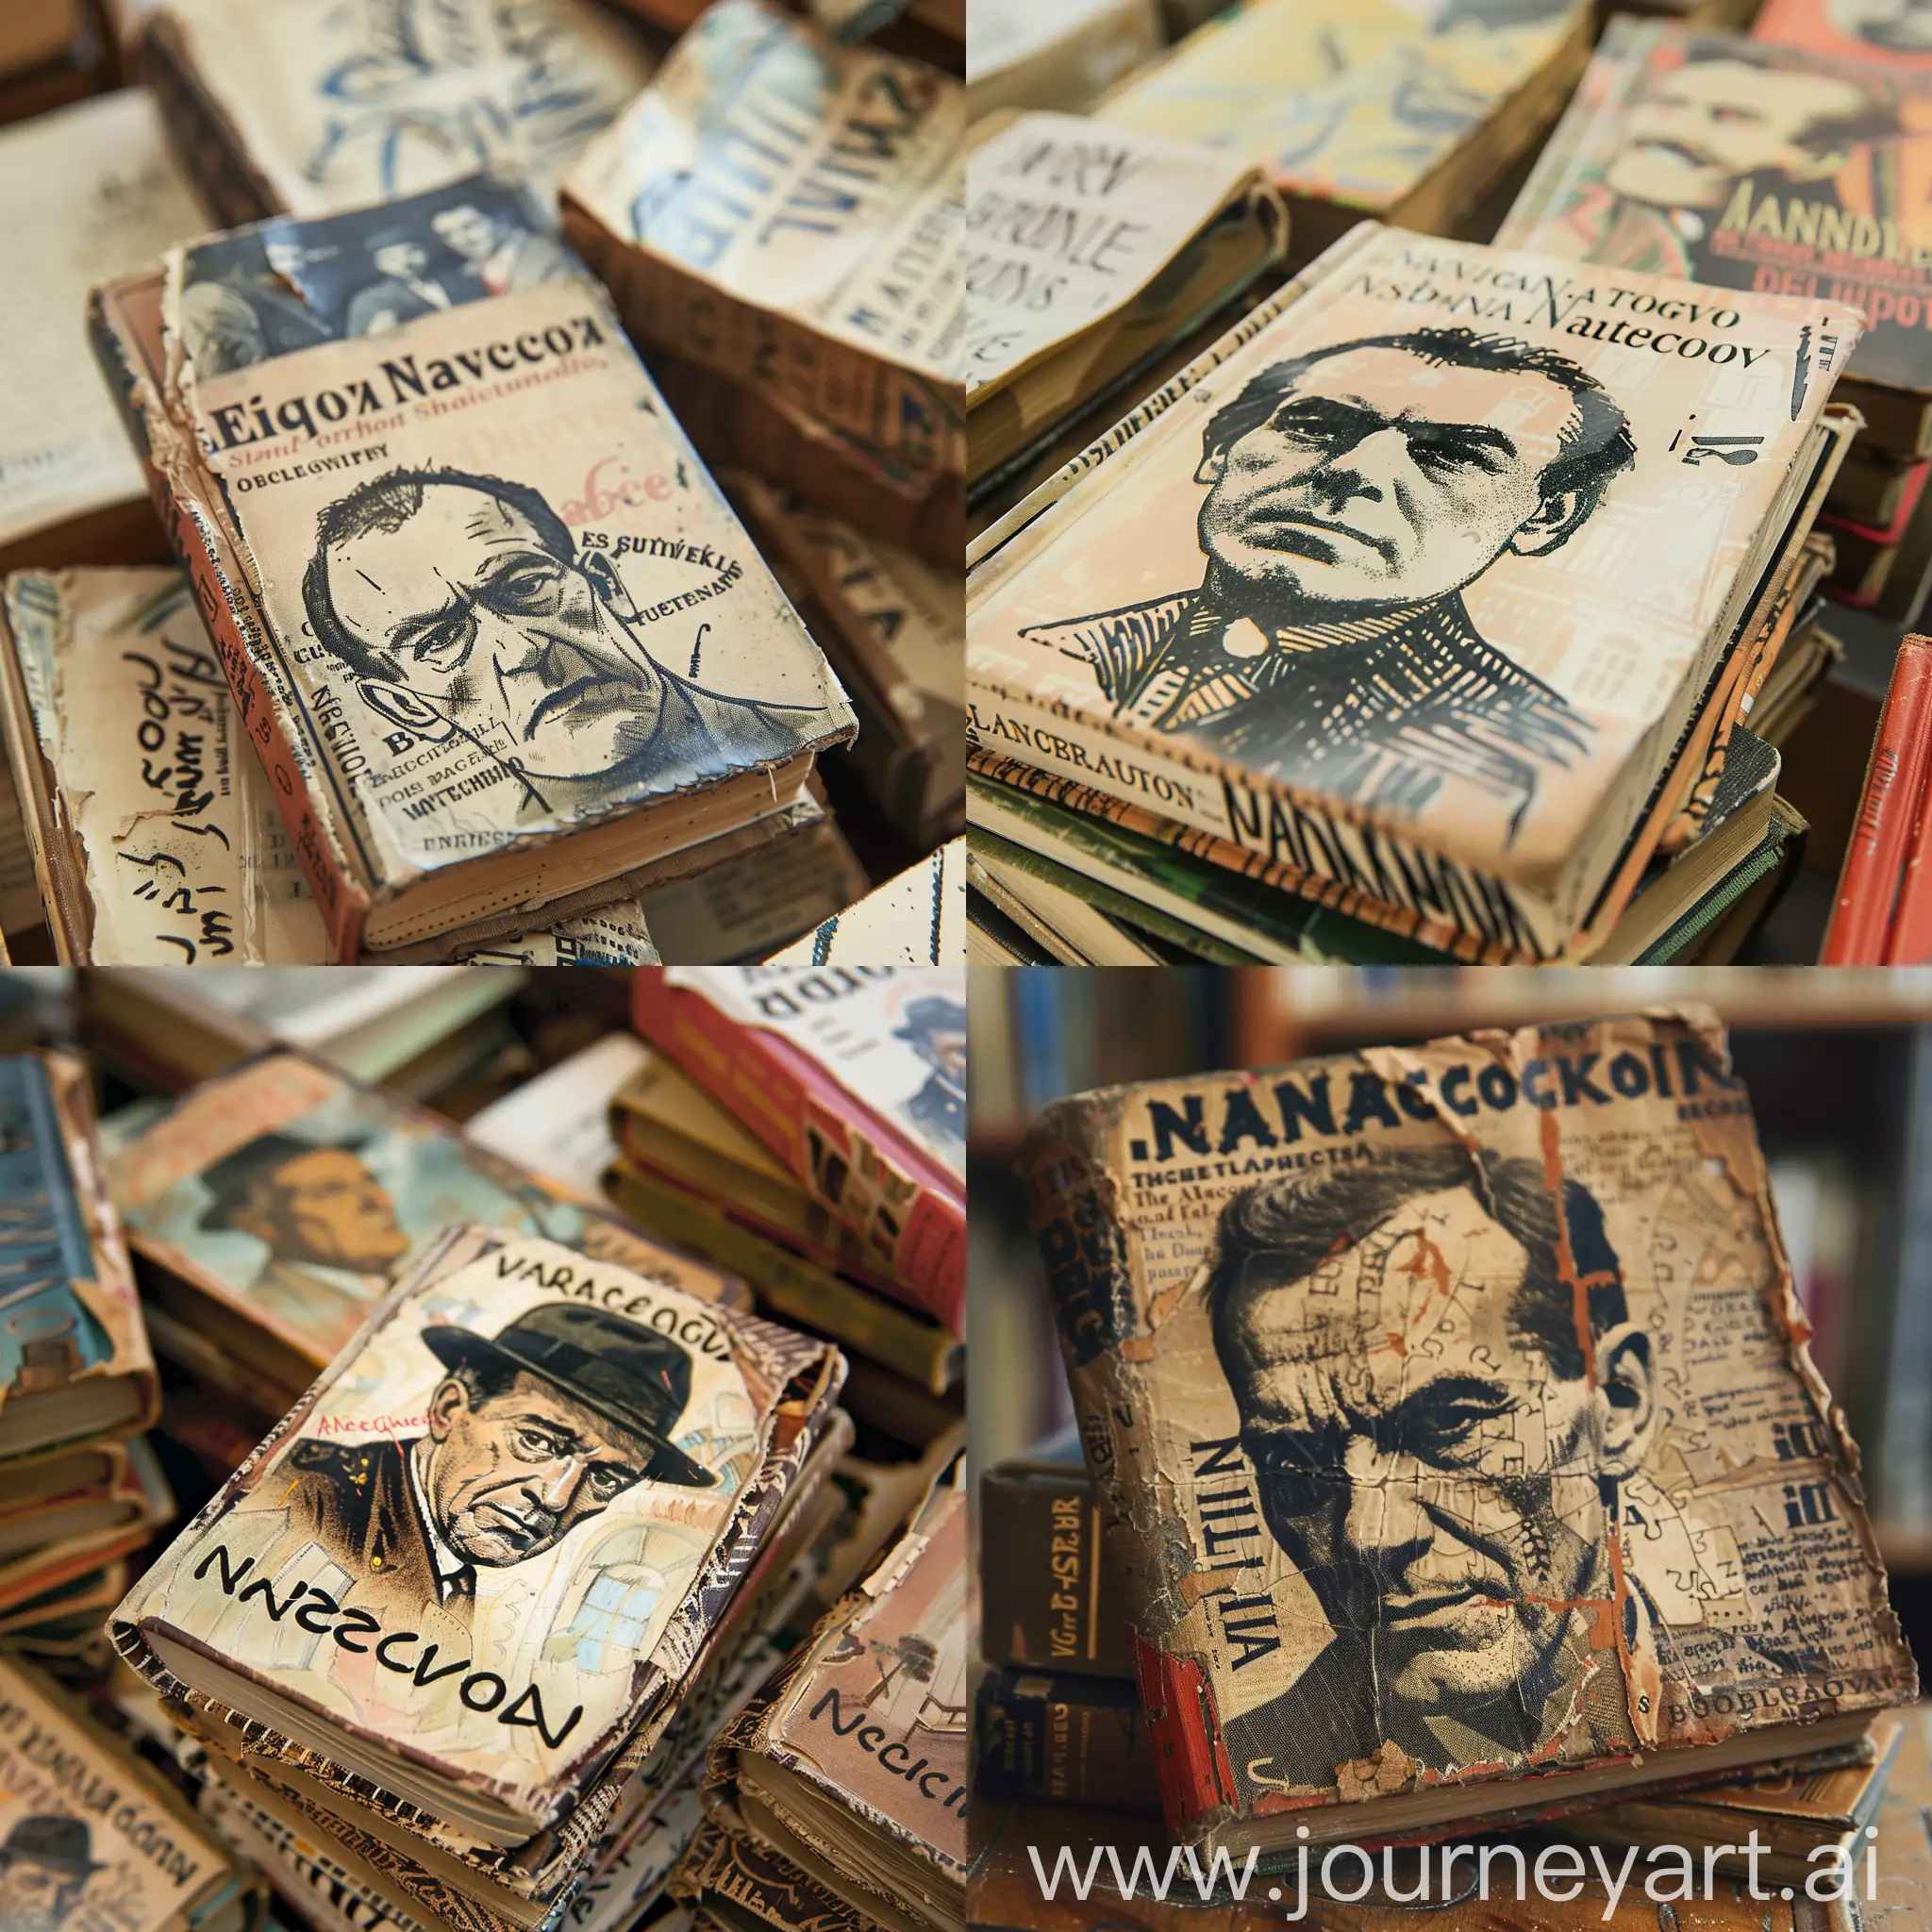 students read books with Vladimir Nabokov written on them